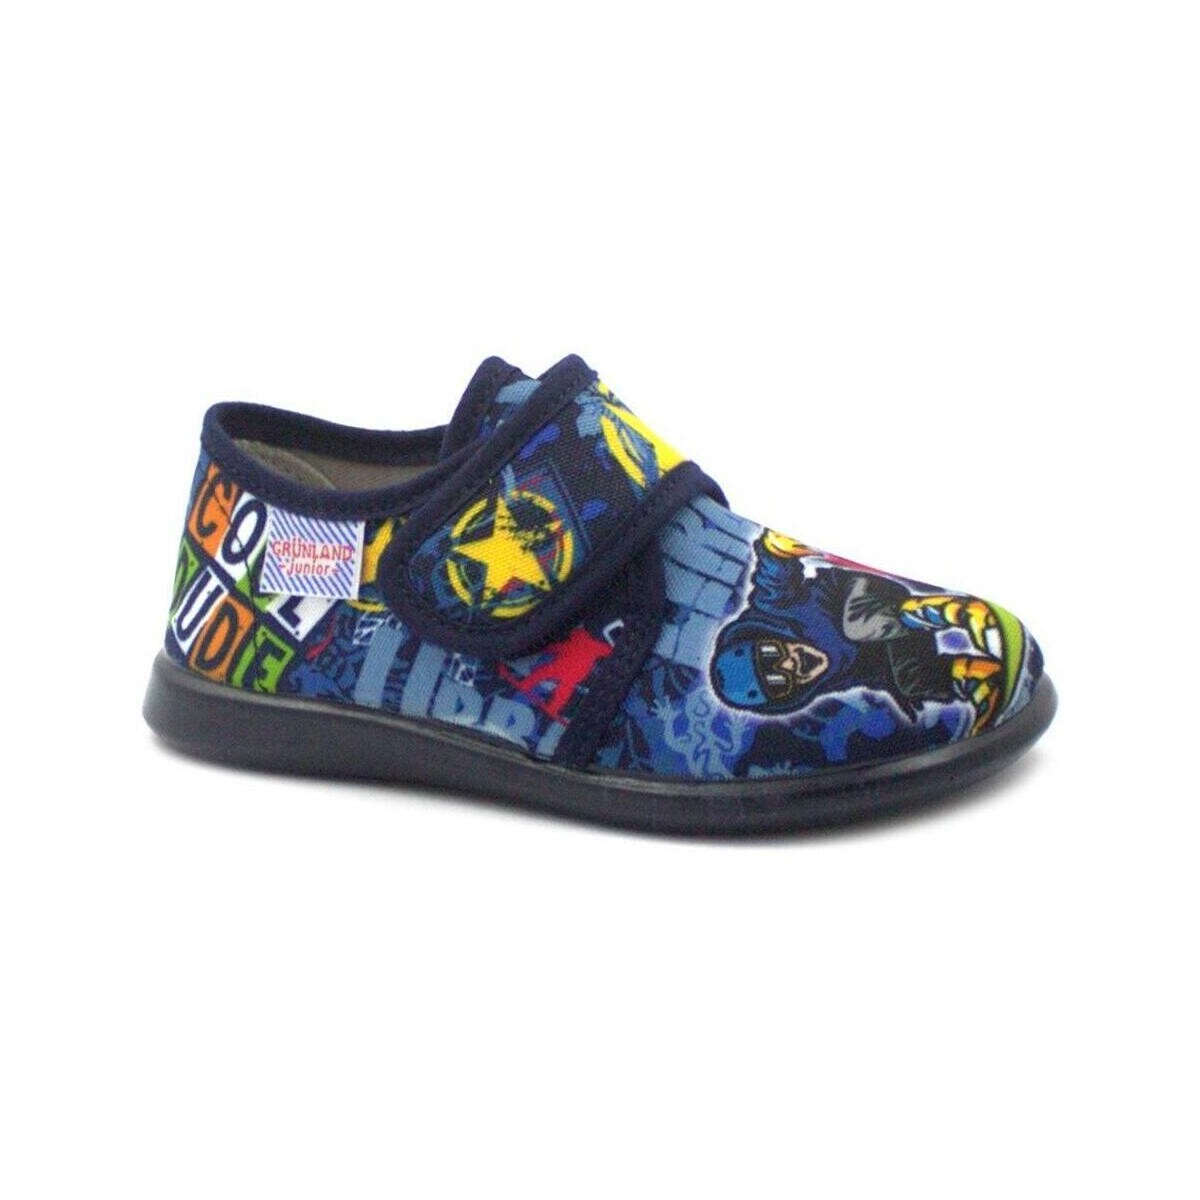 Chaussures Enfant Chaussons Grunland GRU-CCC-PA1154-BB Bleu